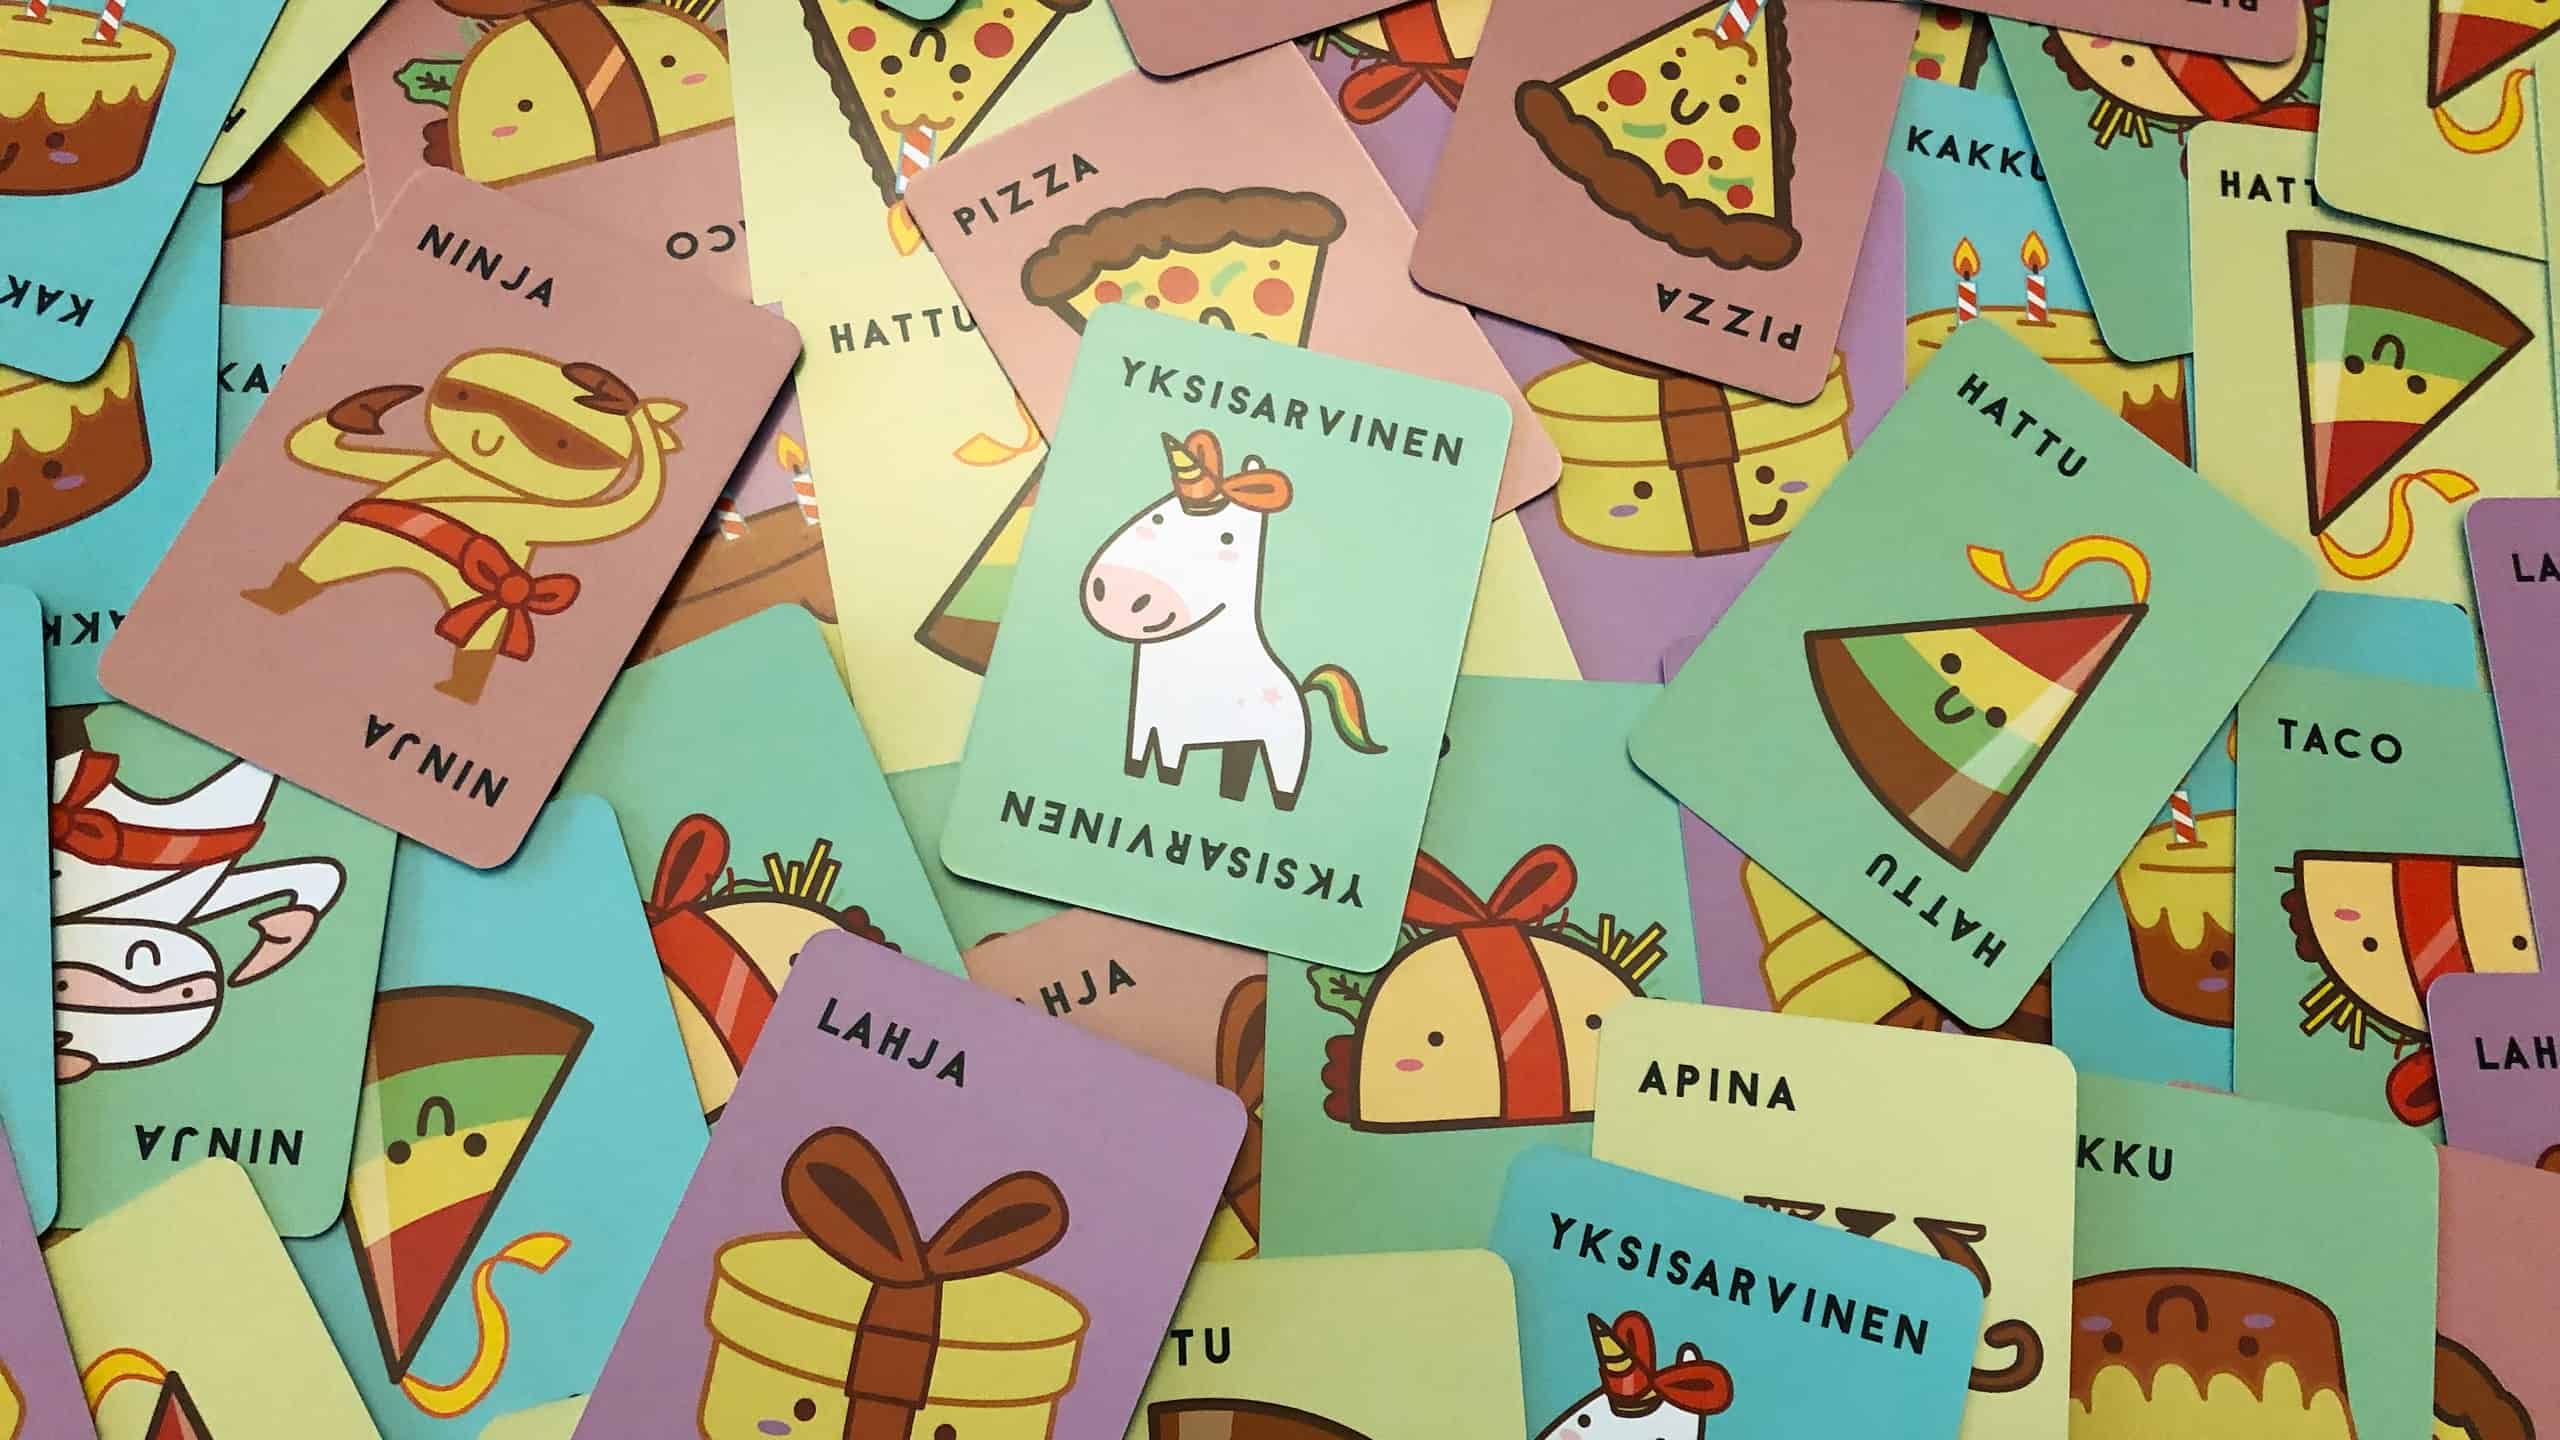 Taco hattu kakku lahja pizza -pelin kortteja